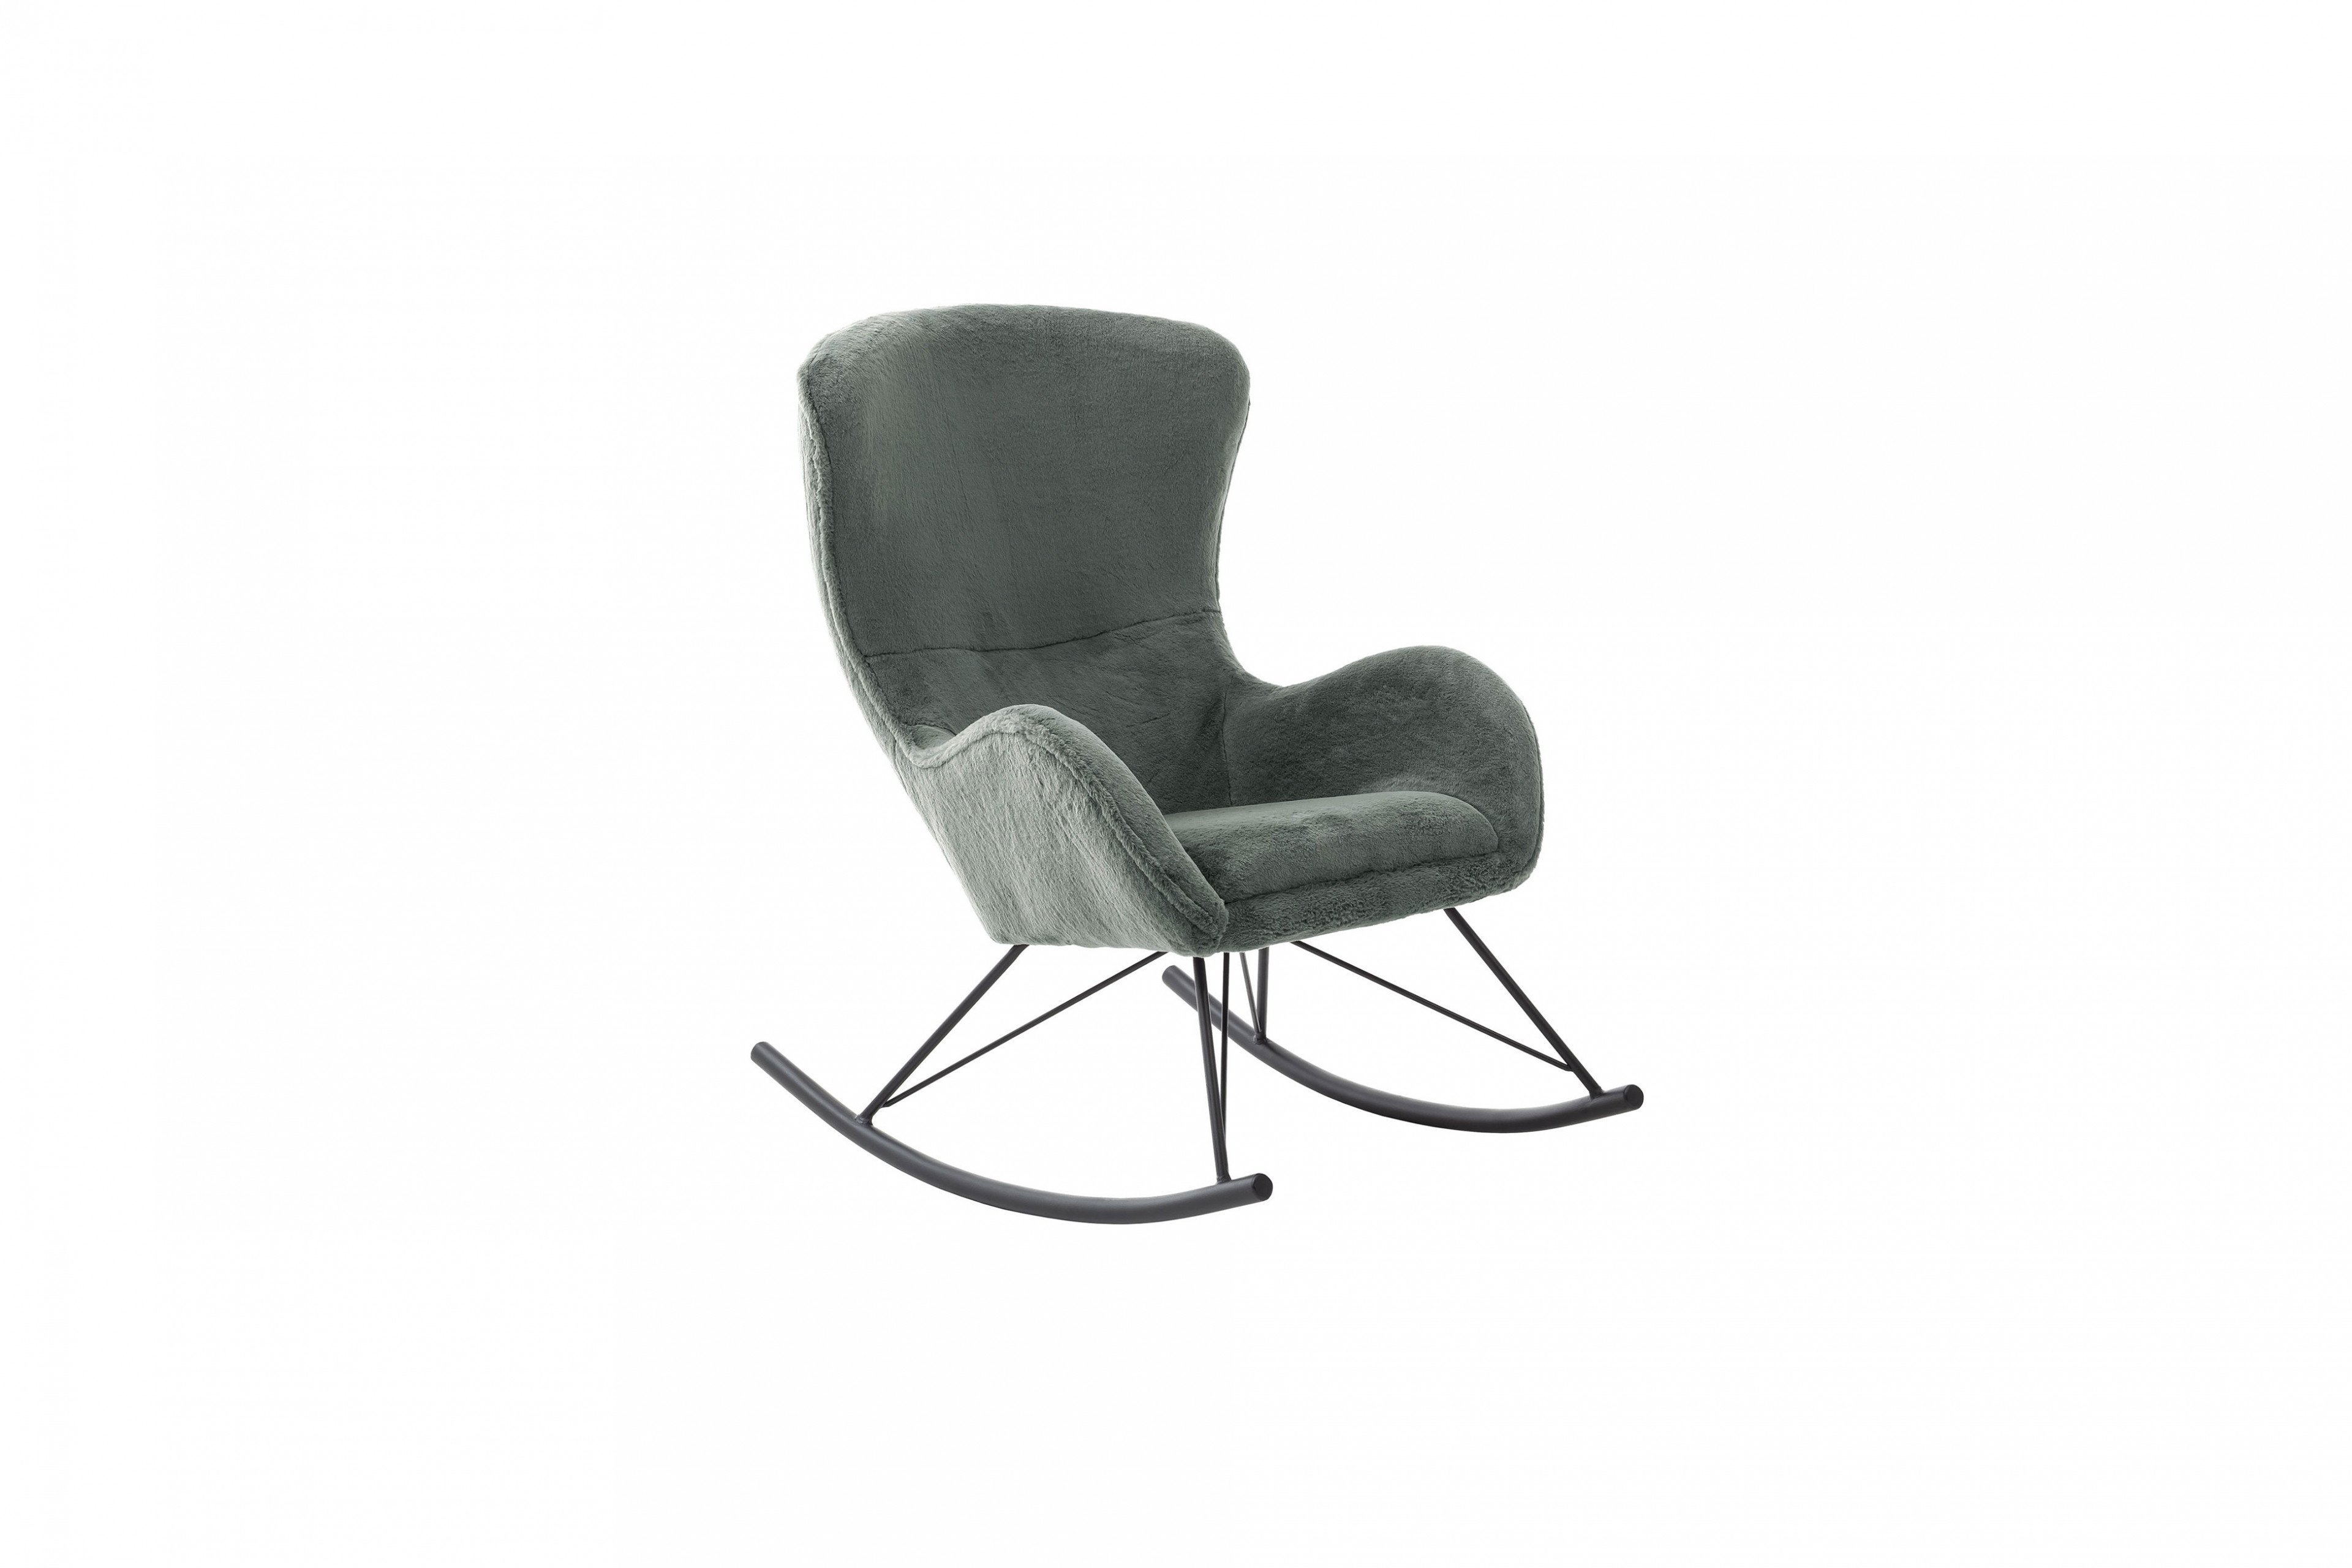 MCA furniture | Oriolo online Modell in bei Graugrün Schaukelstuhl